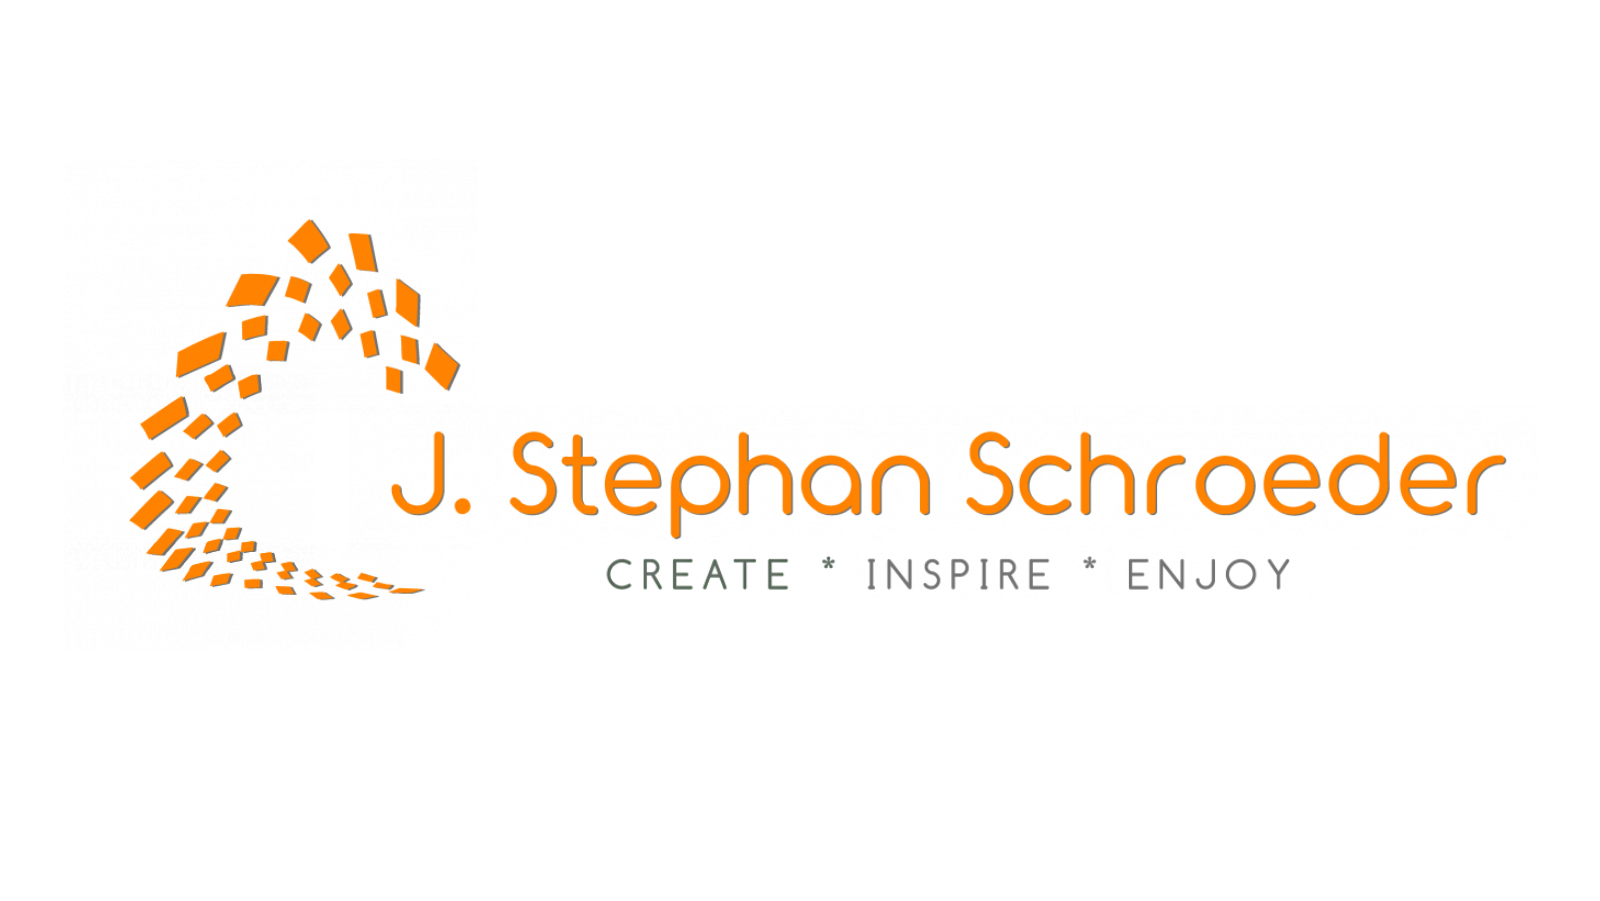 J. Stephan Schroeder - Inspire * Create * Enjoy